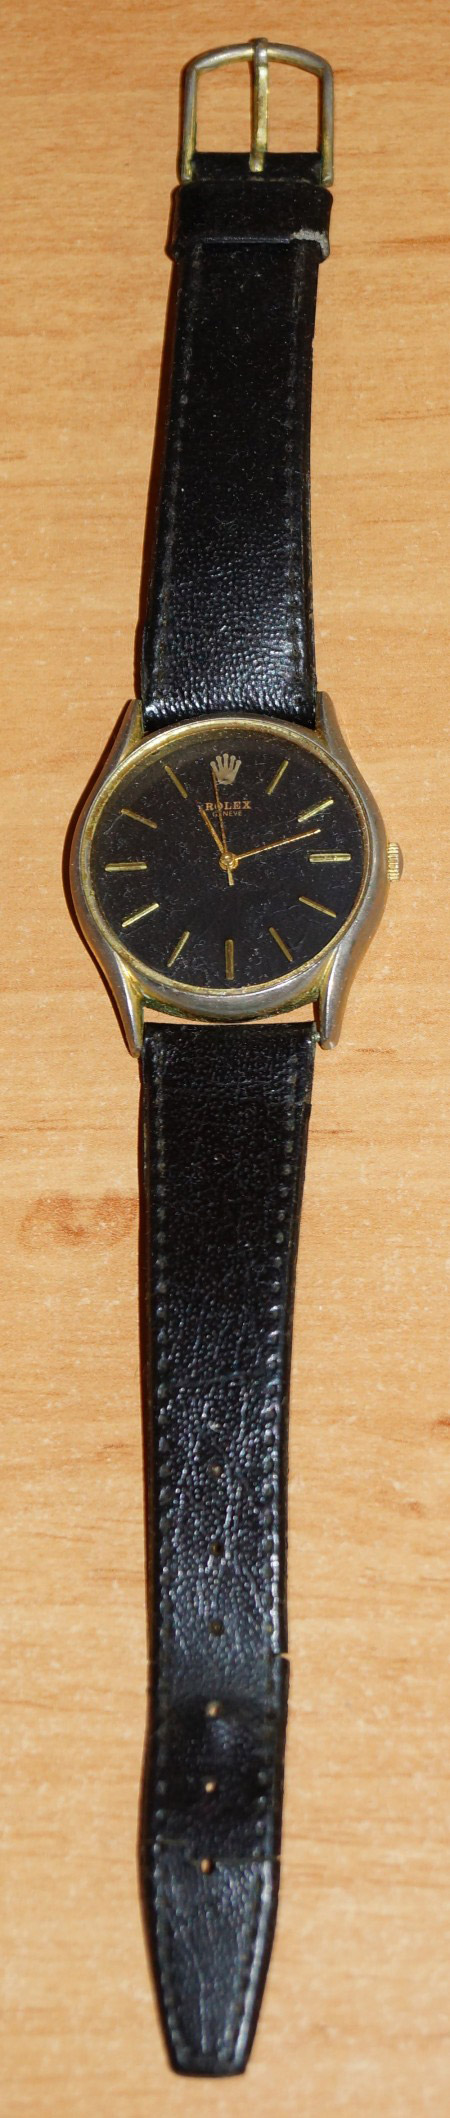 Rolex - Herren - Armbanduhr - 1000.jpg